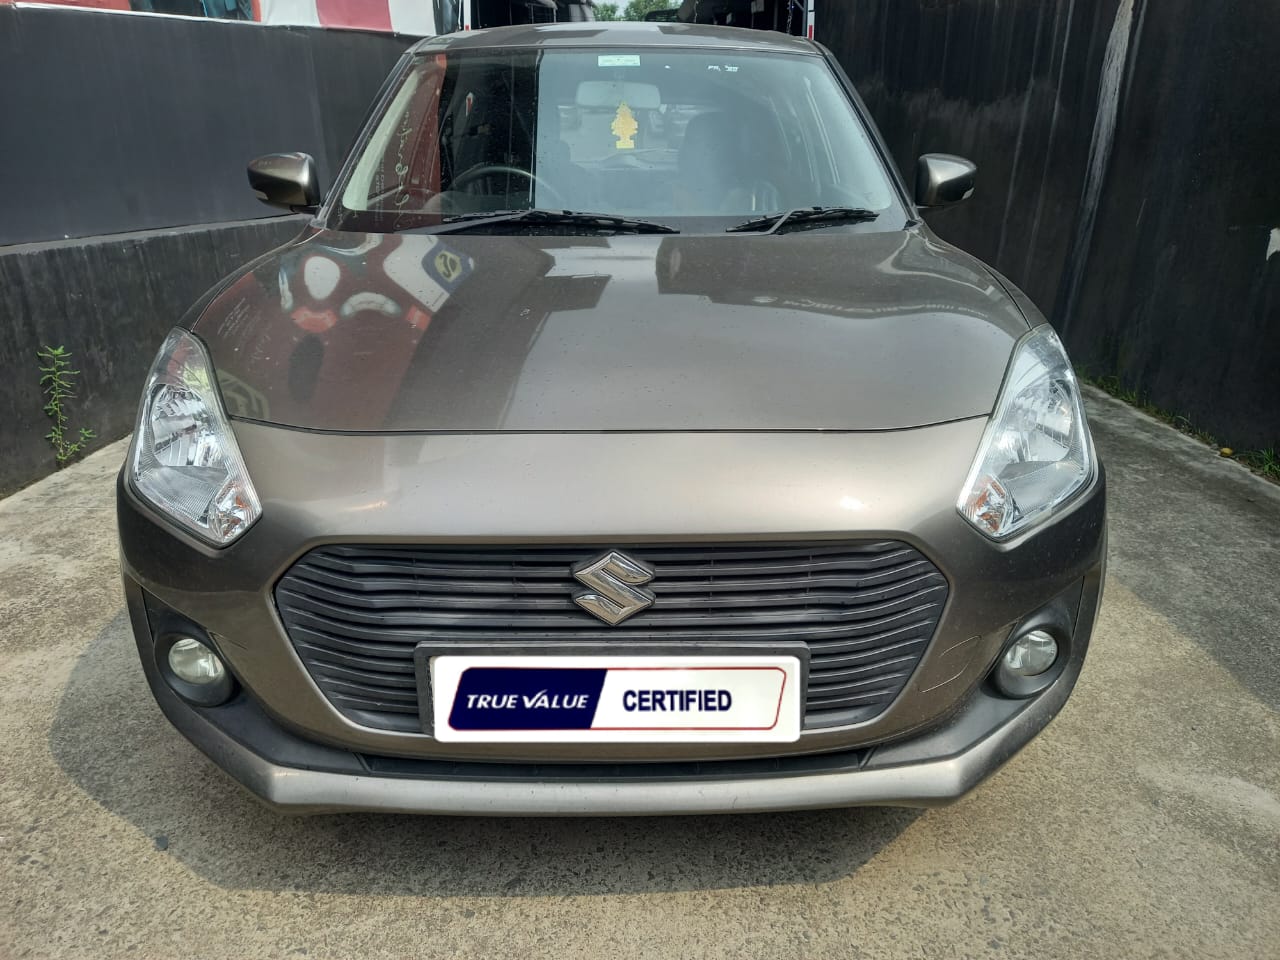 MARUTI SWIFT 2018 Second-hand Car for Sale in Ernakulam